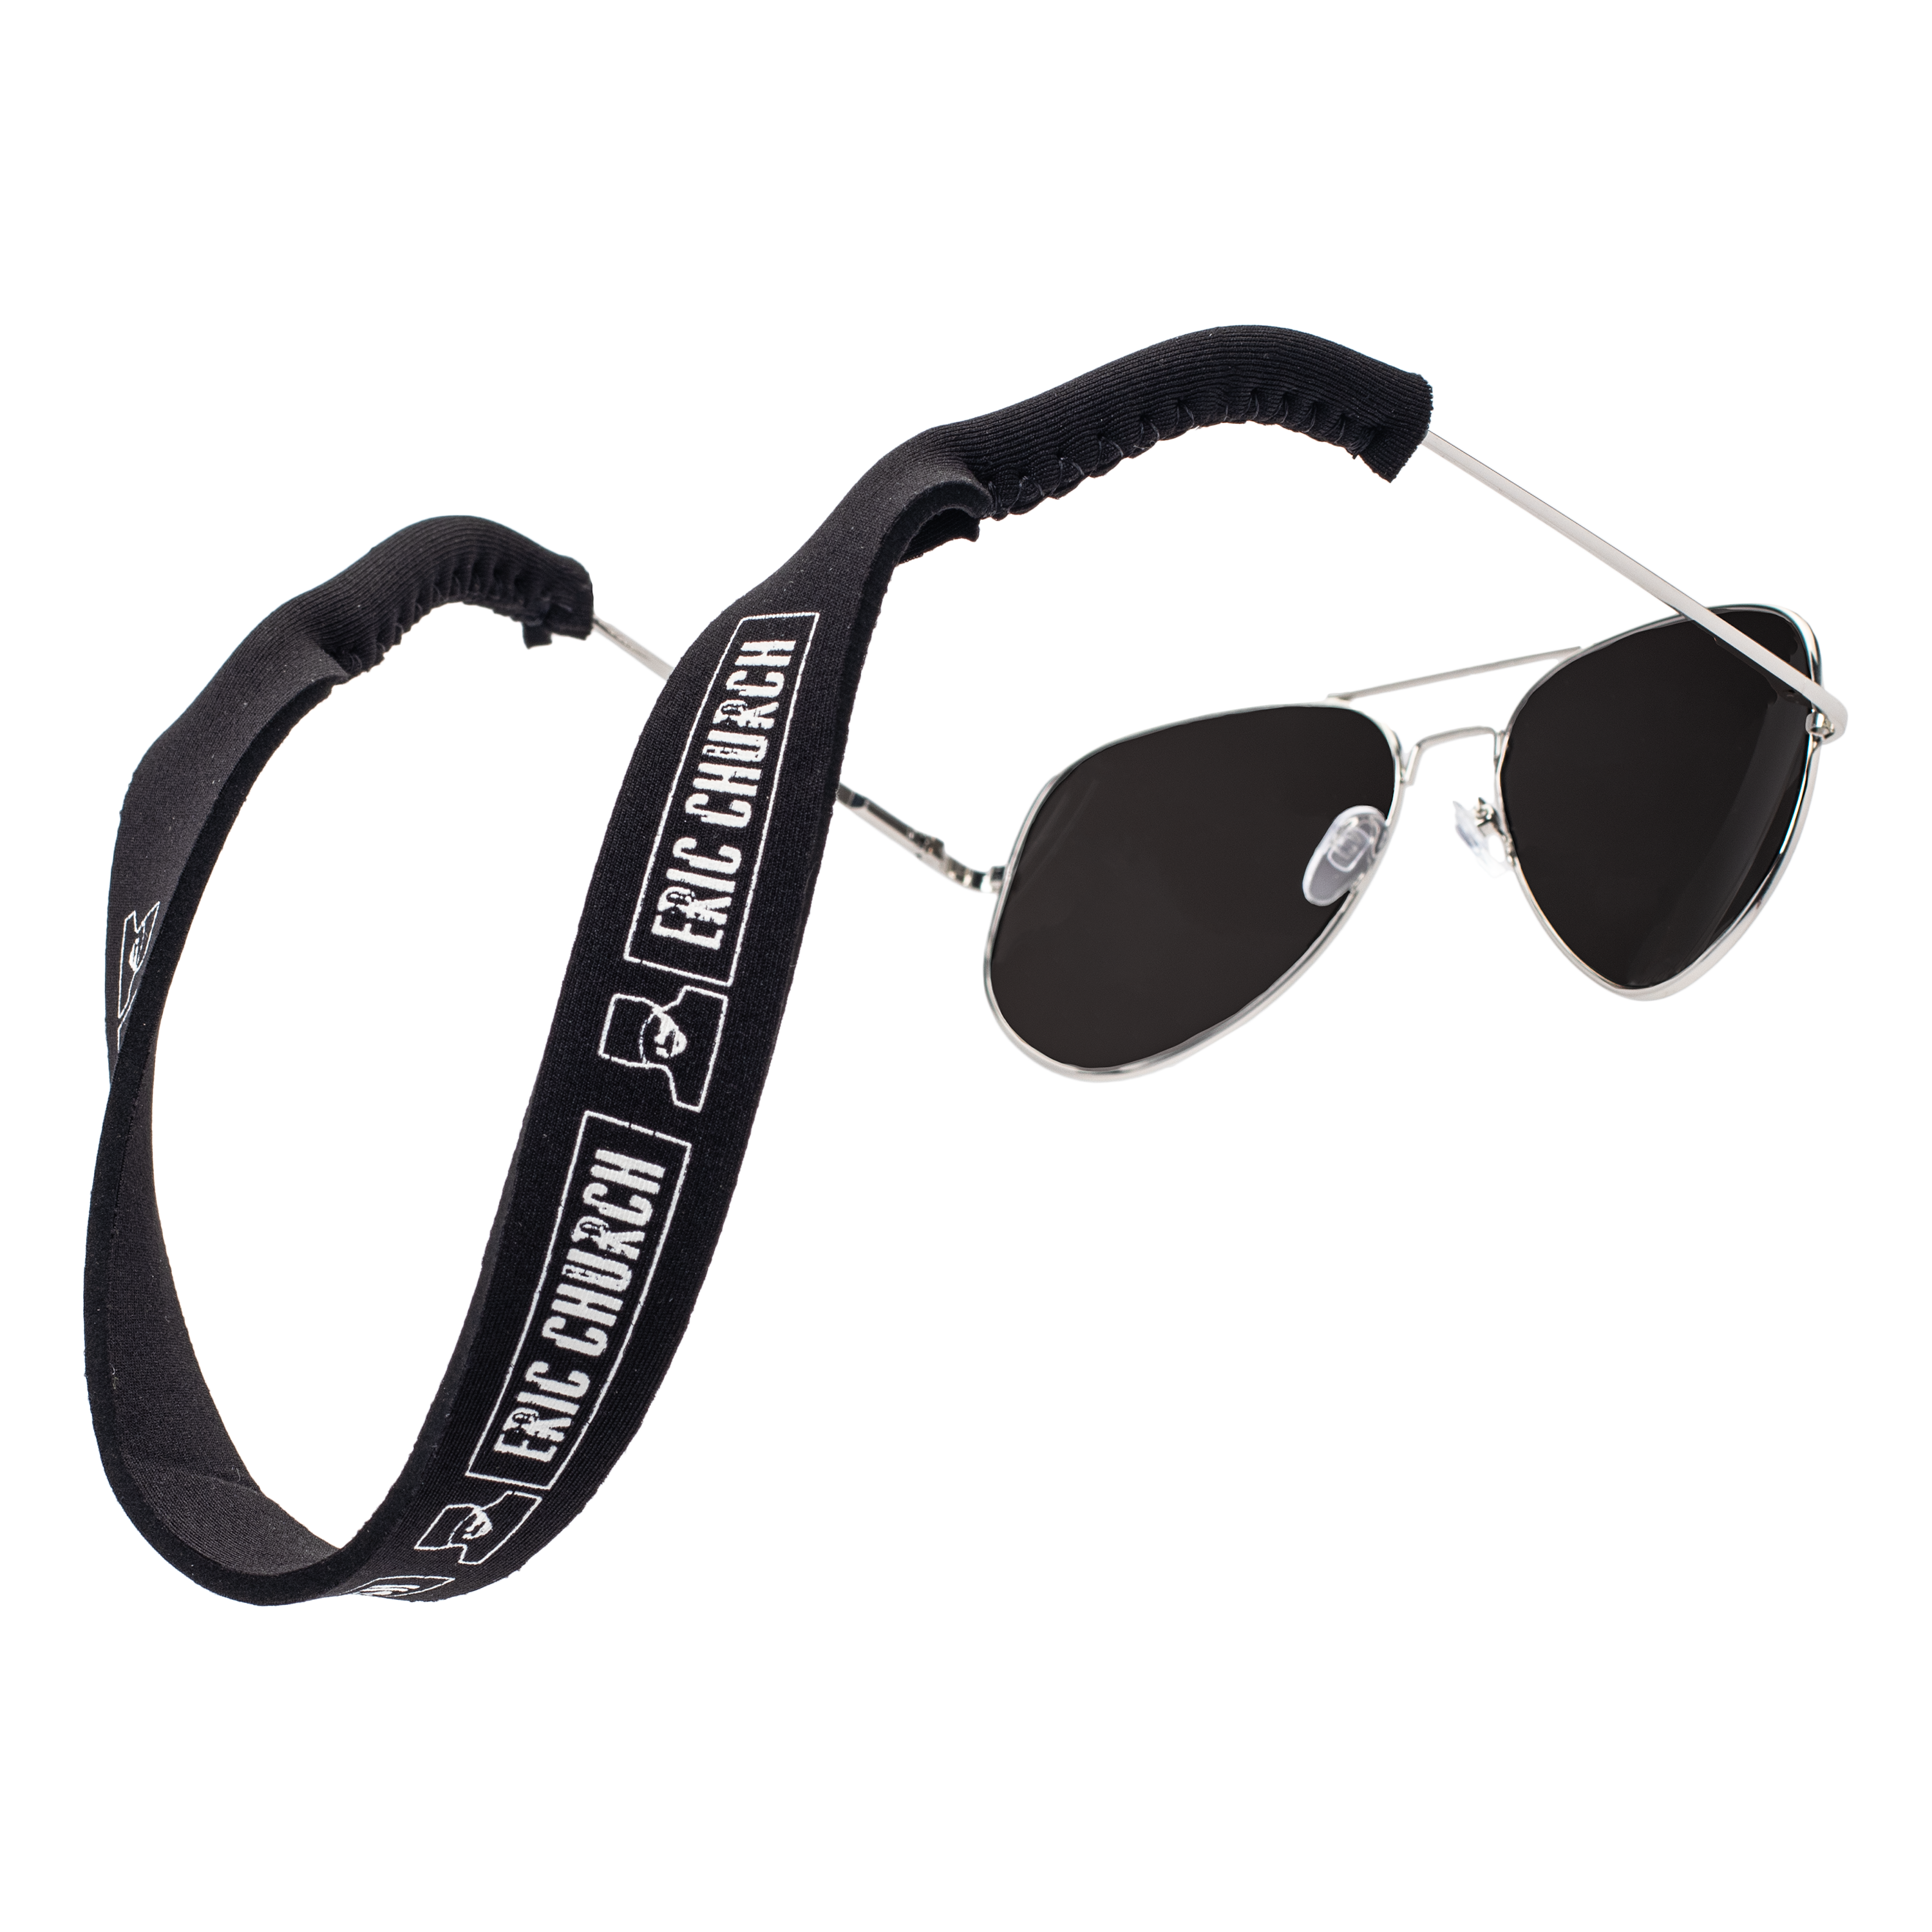 Eric Church Sunglasses Straps